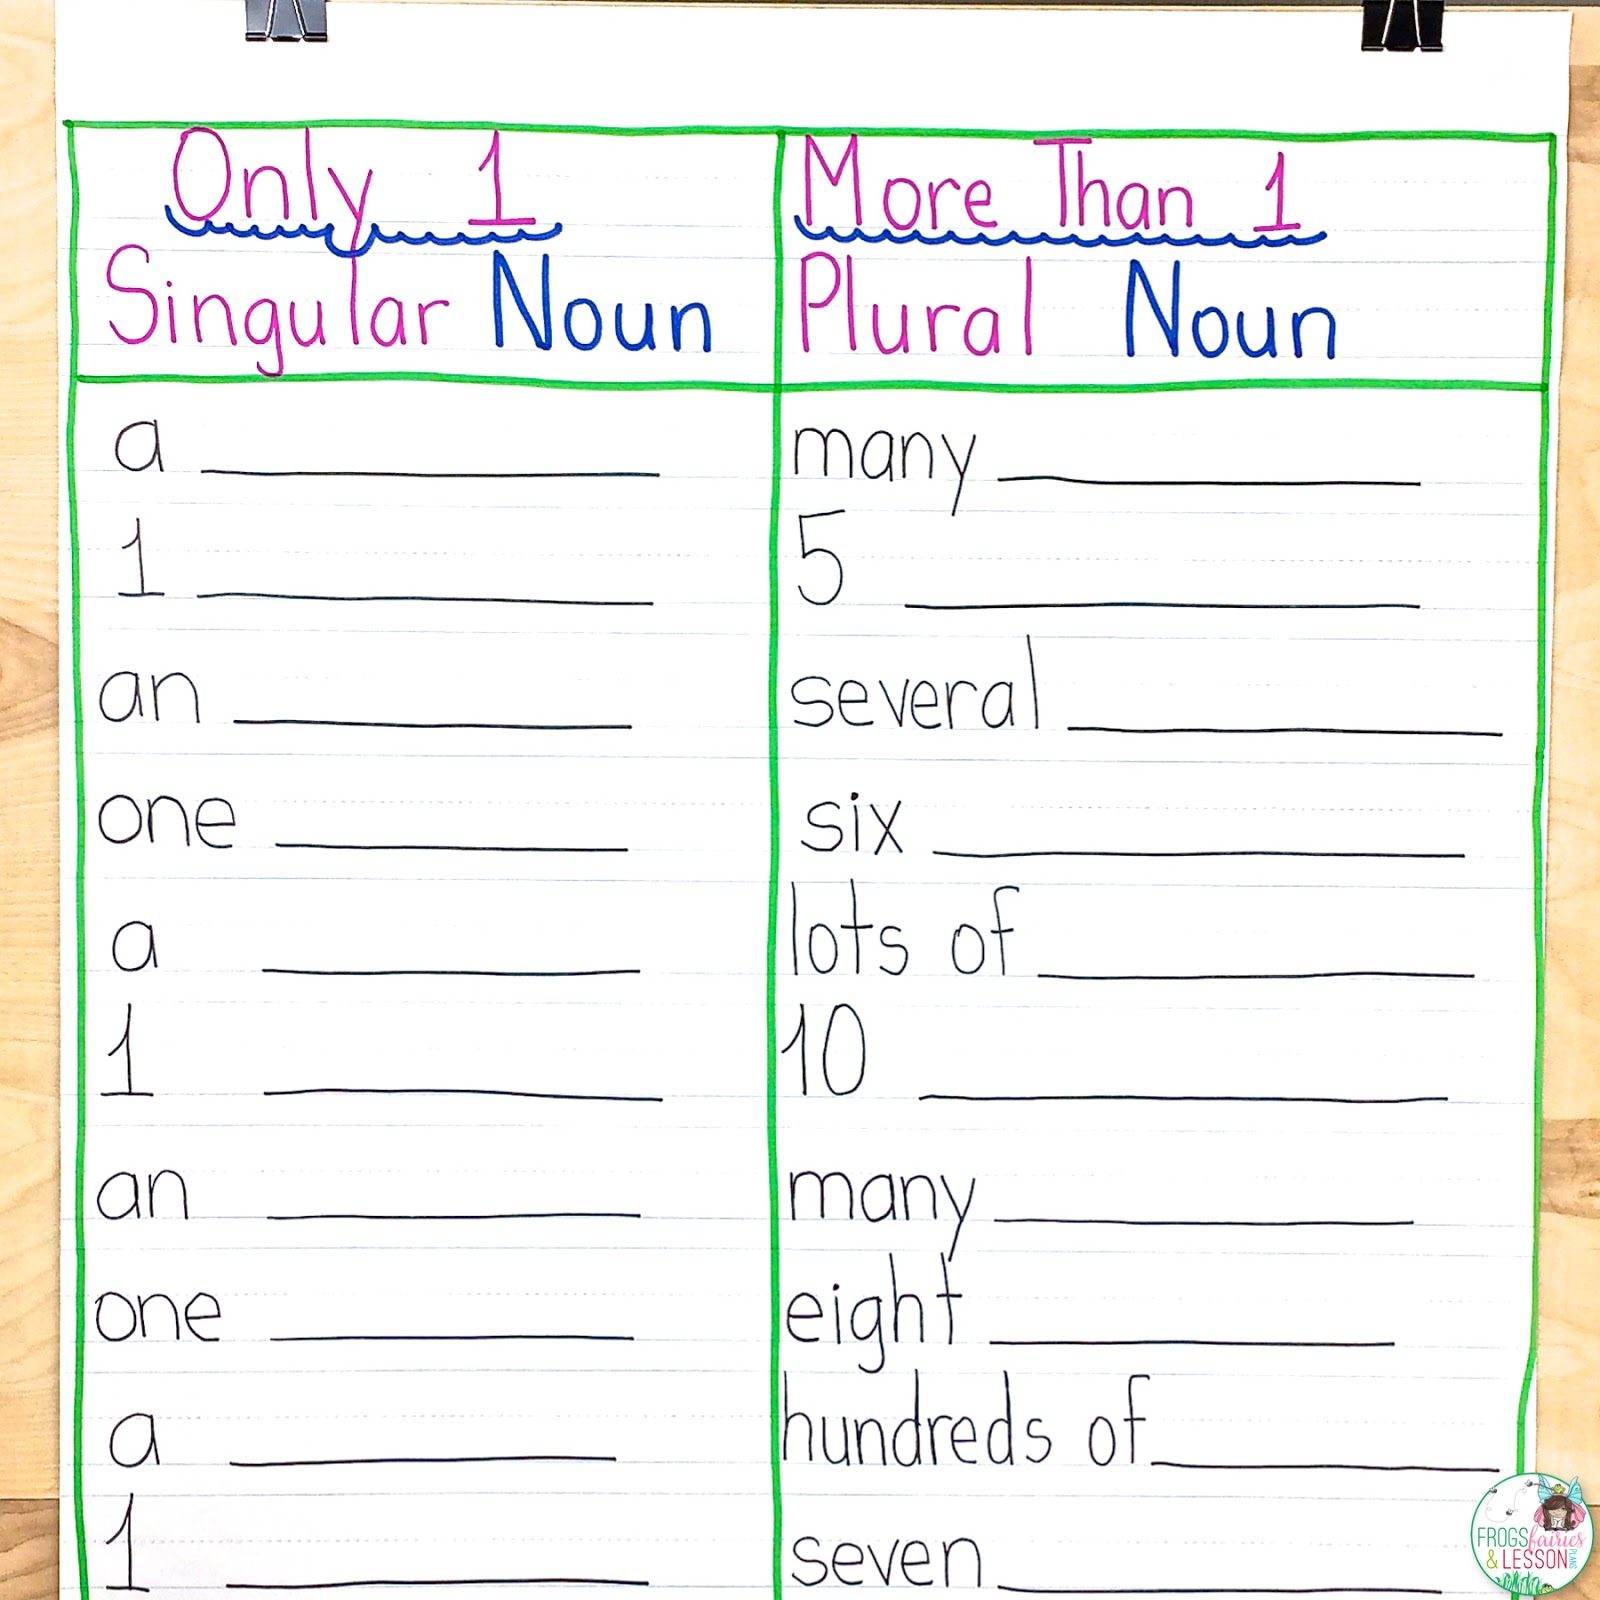 Singular and Plural Nouns Anchor Chart